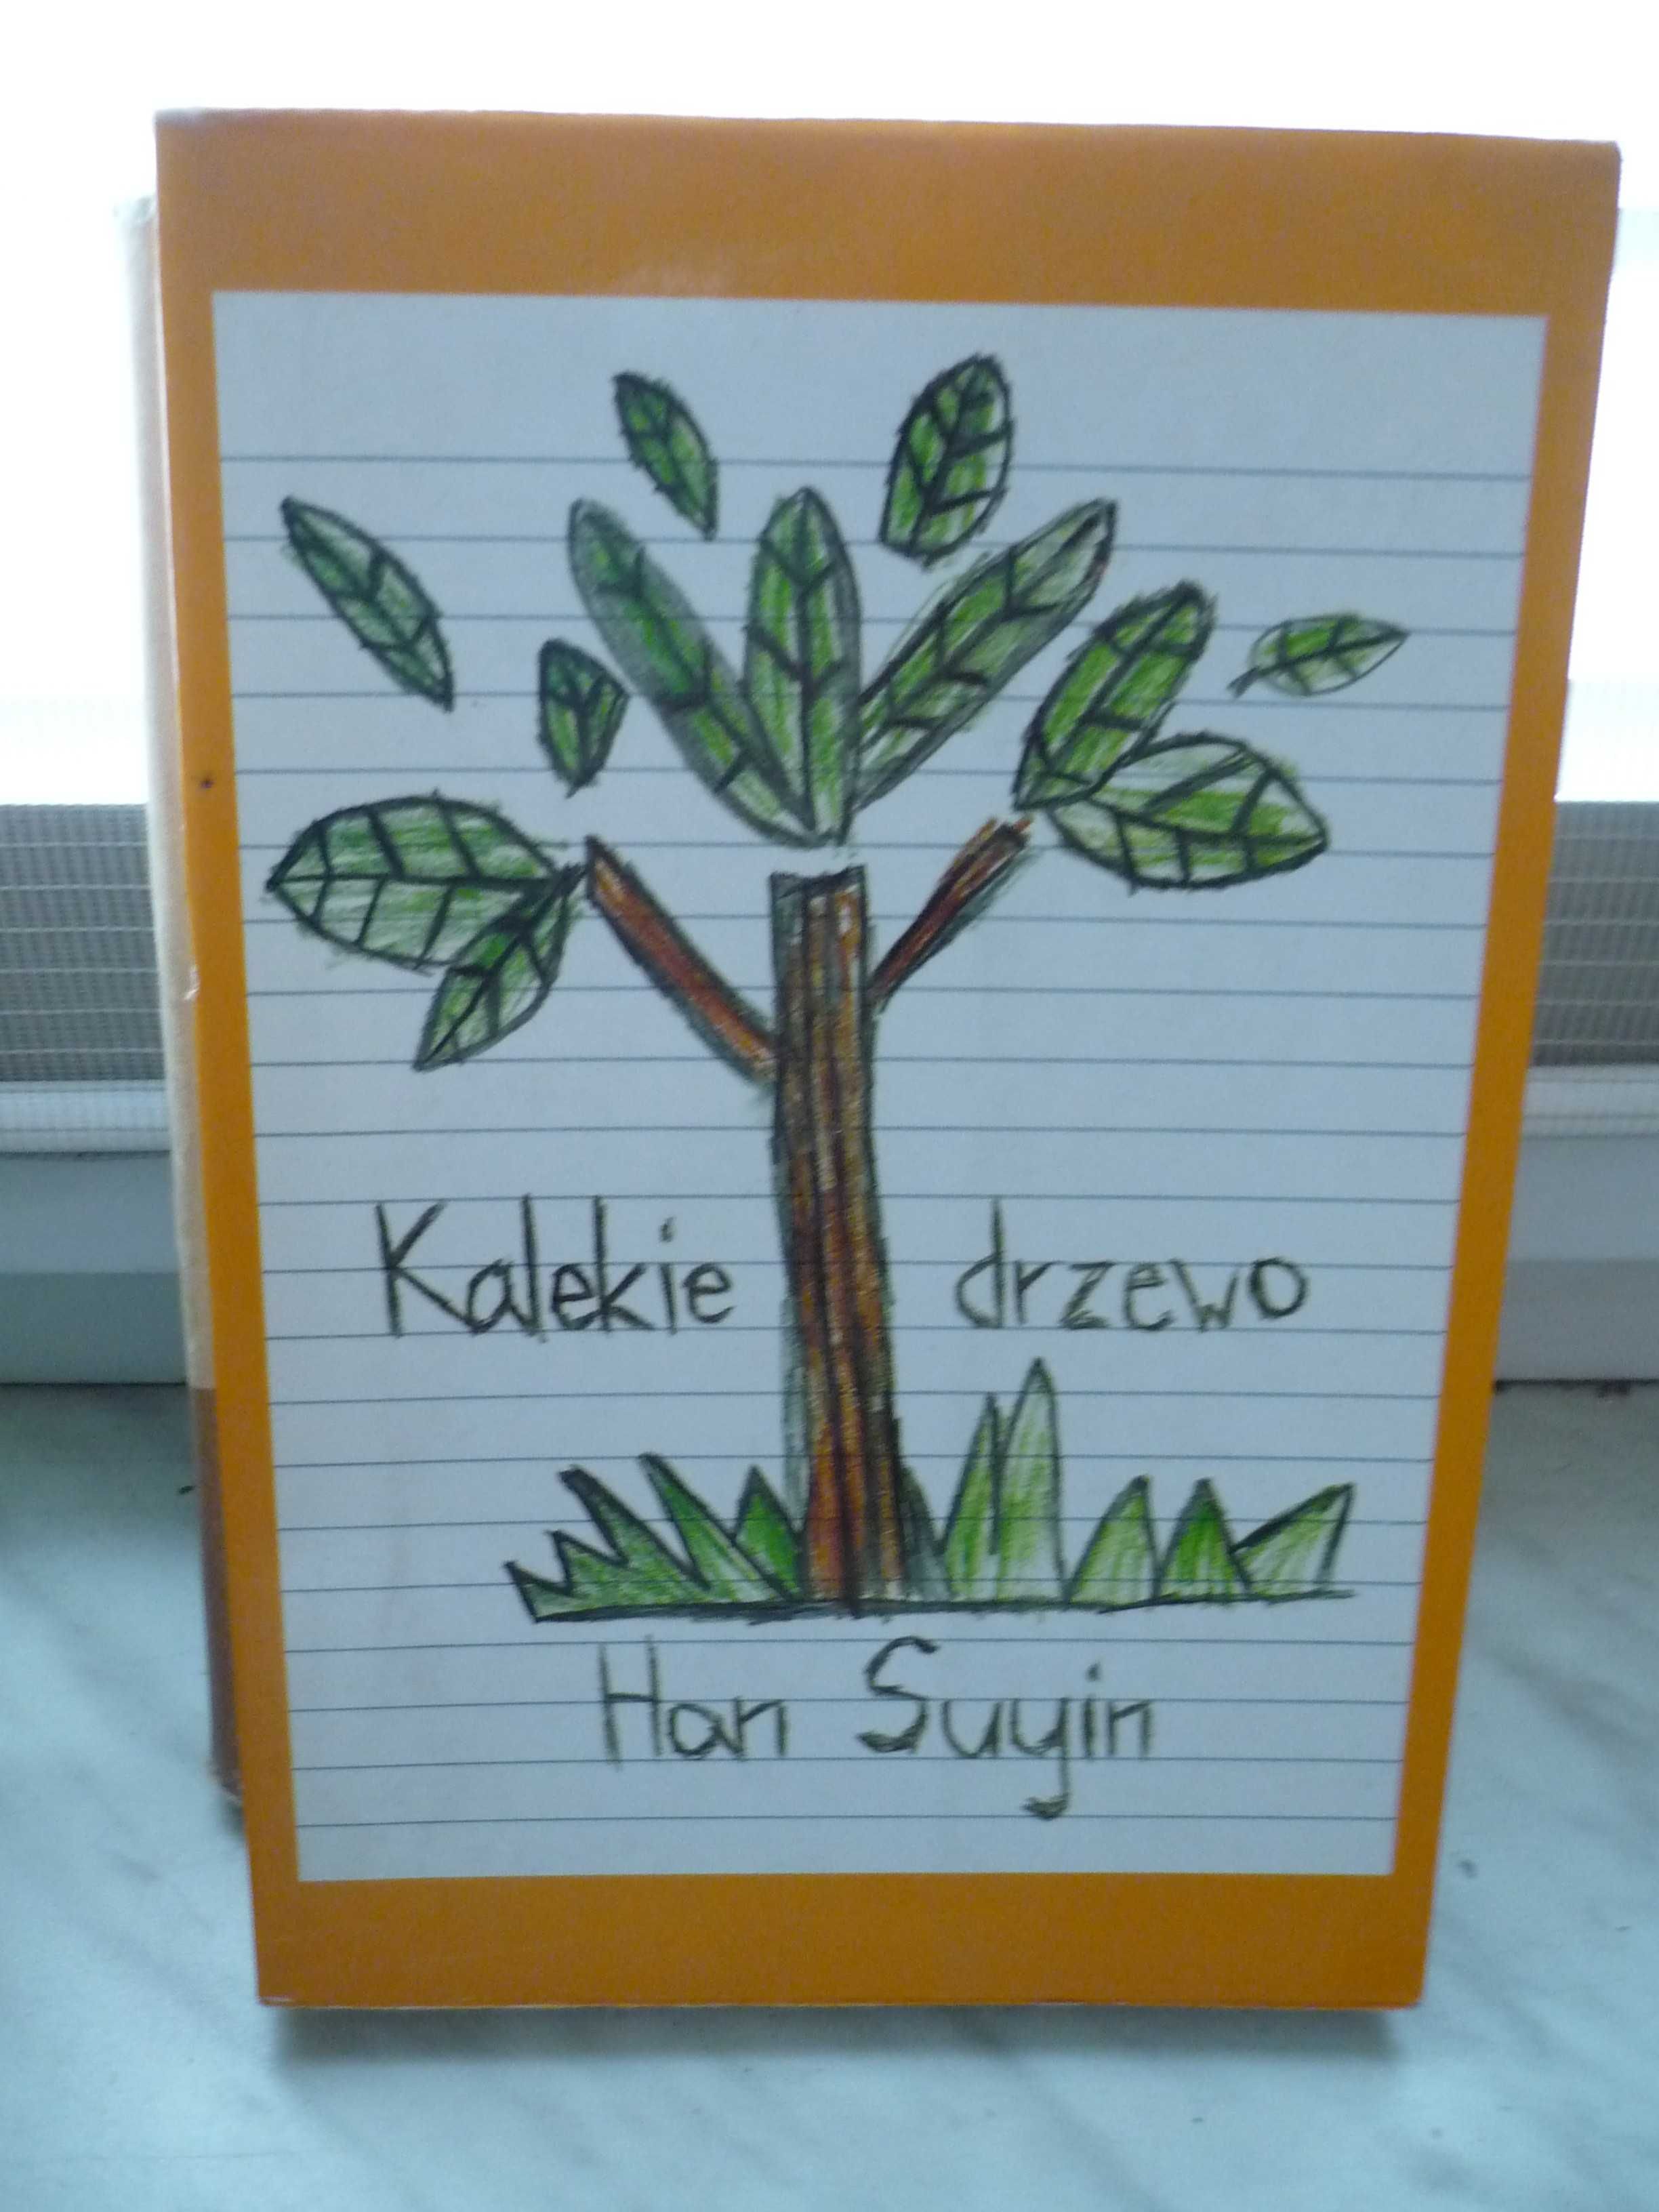 Kalekie drzewo , Han Suyin.